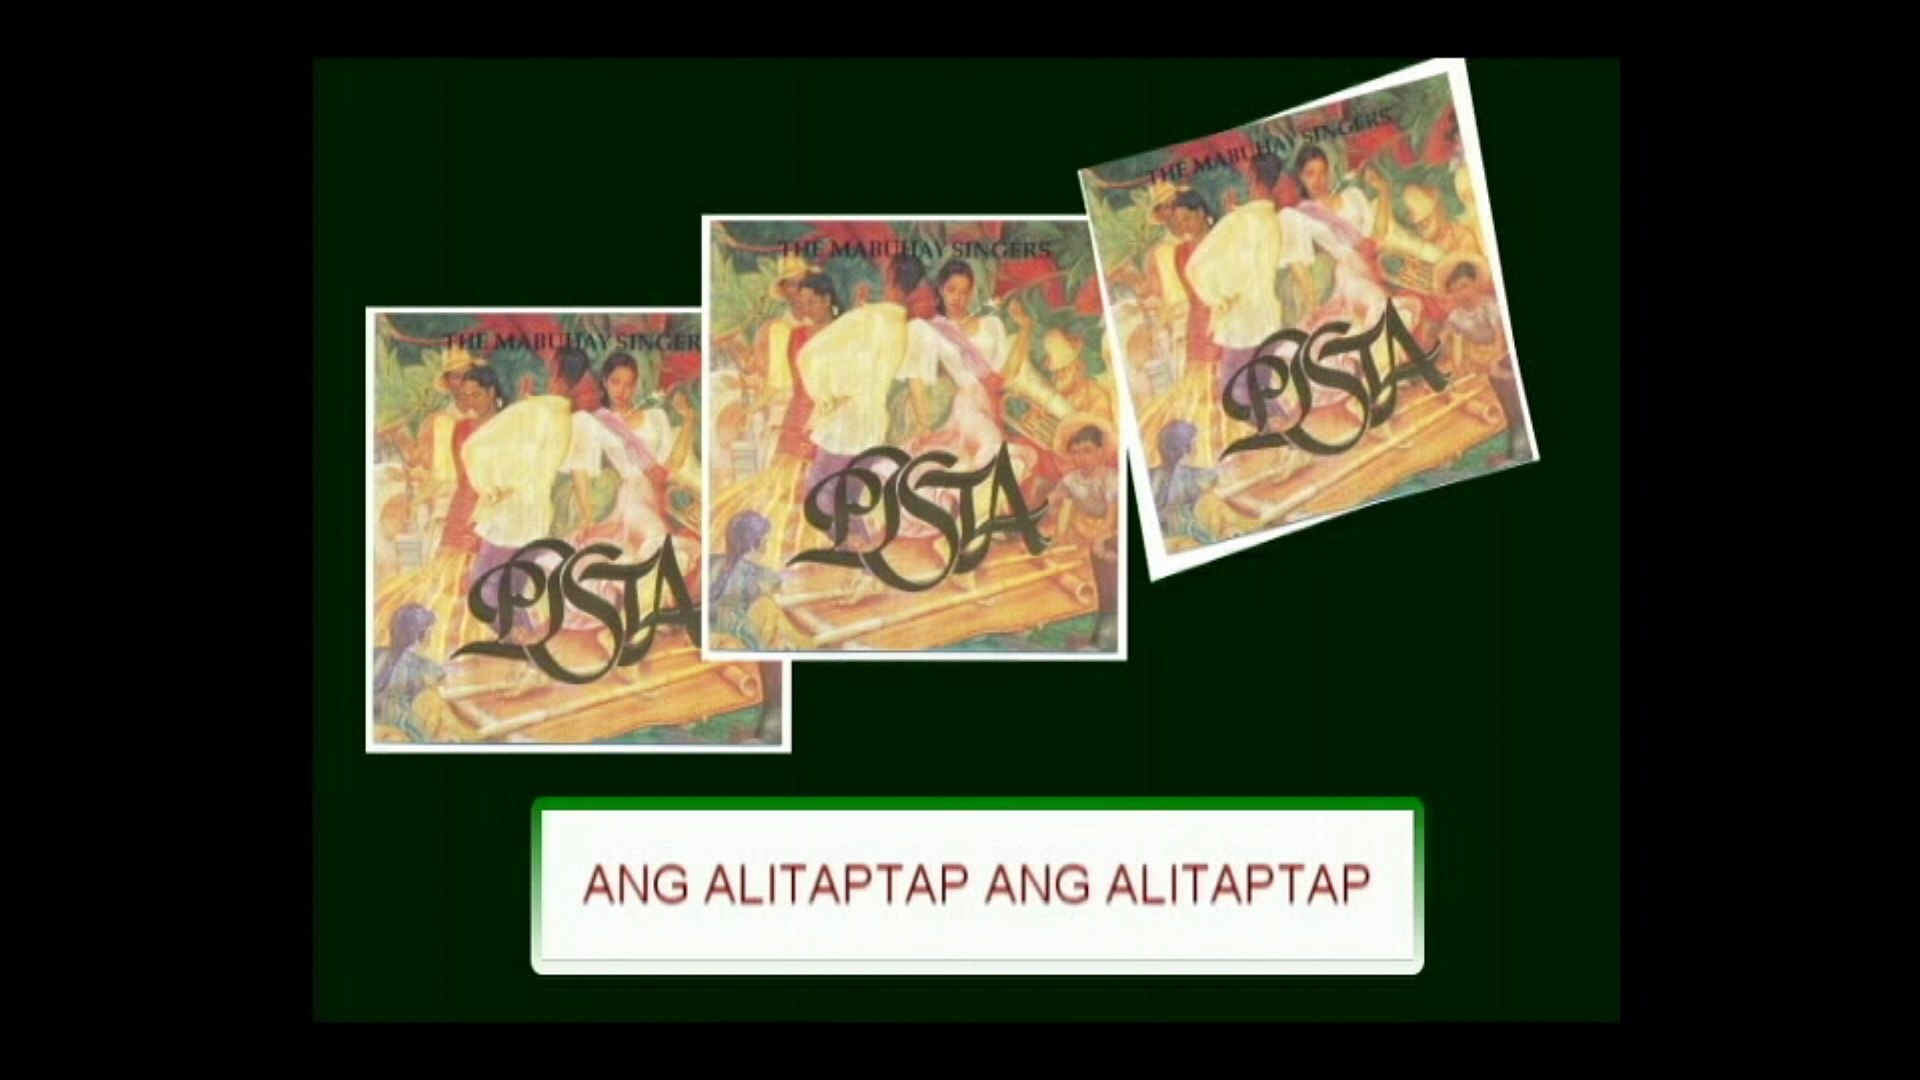 The Mabuhay Singers - Alitaptap (Lyrics Video)